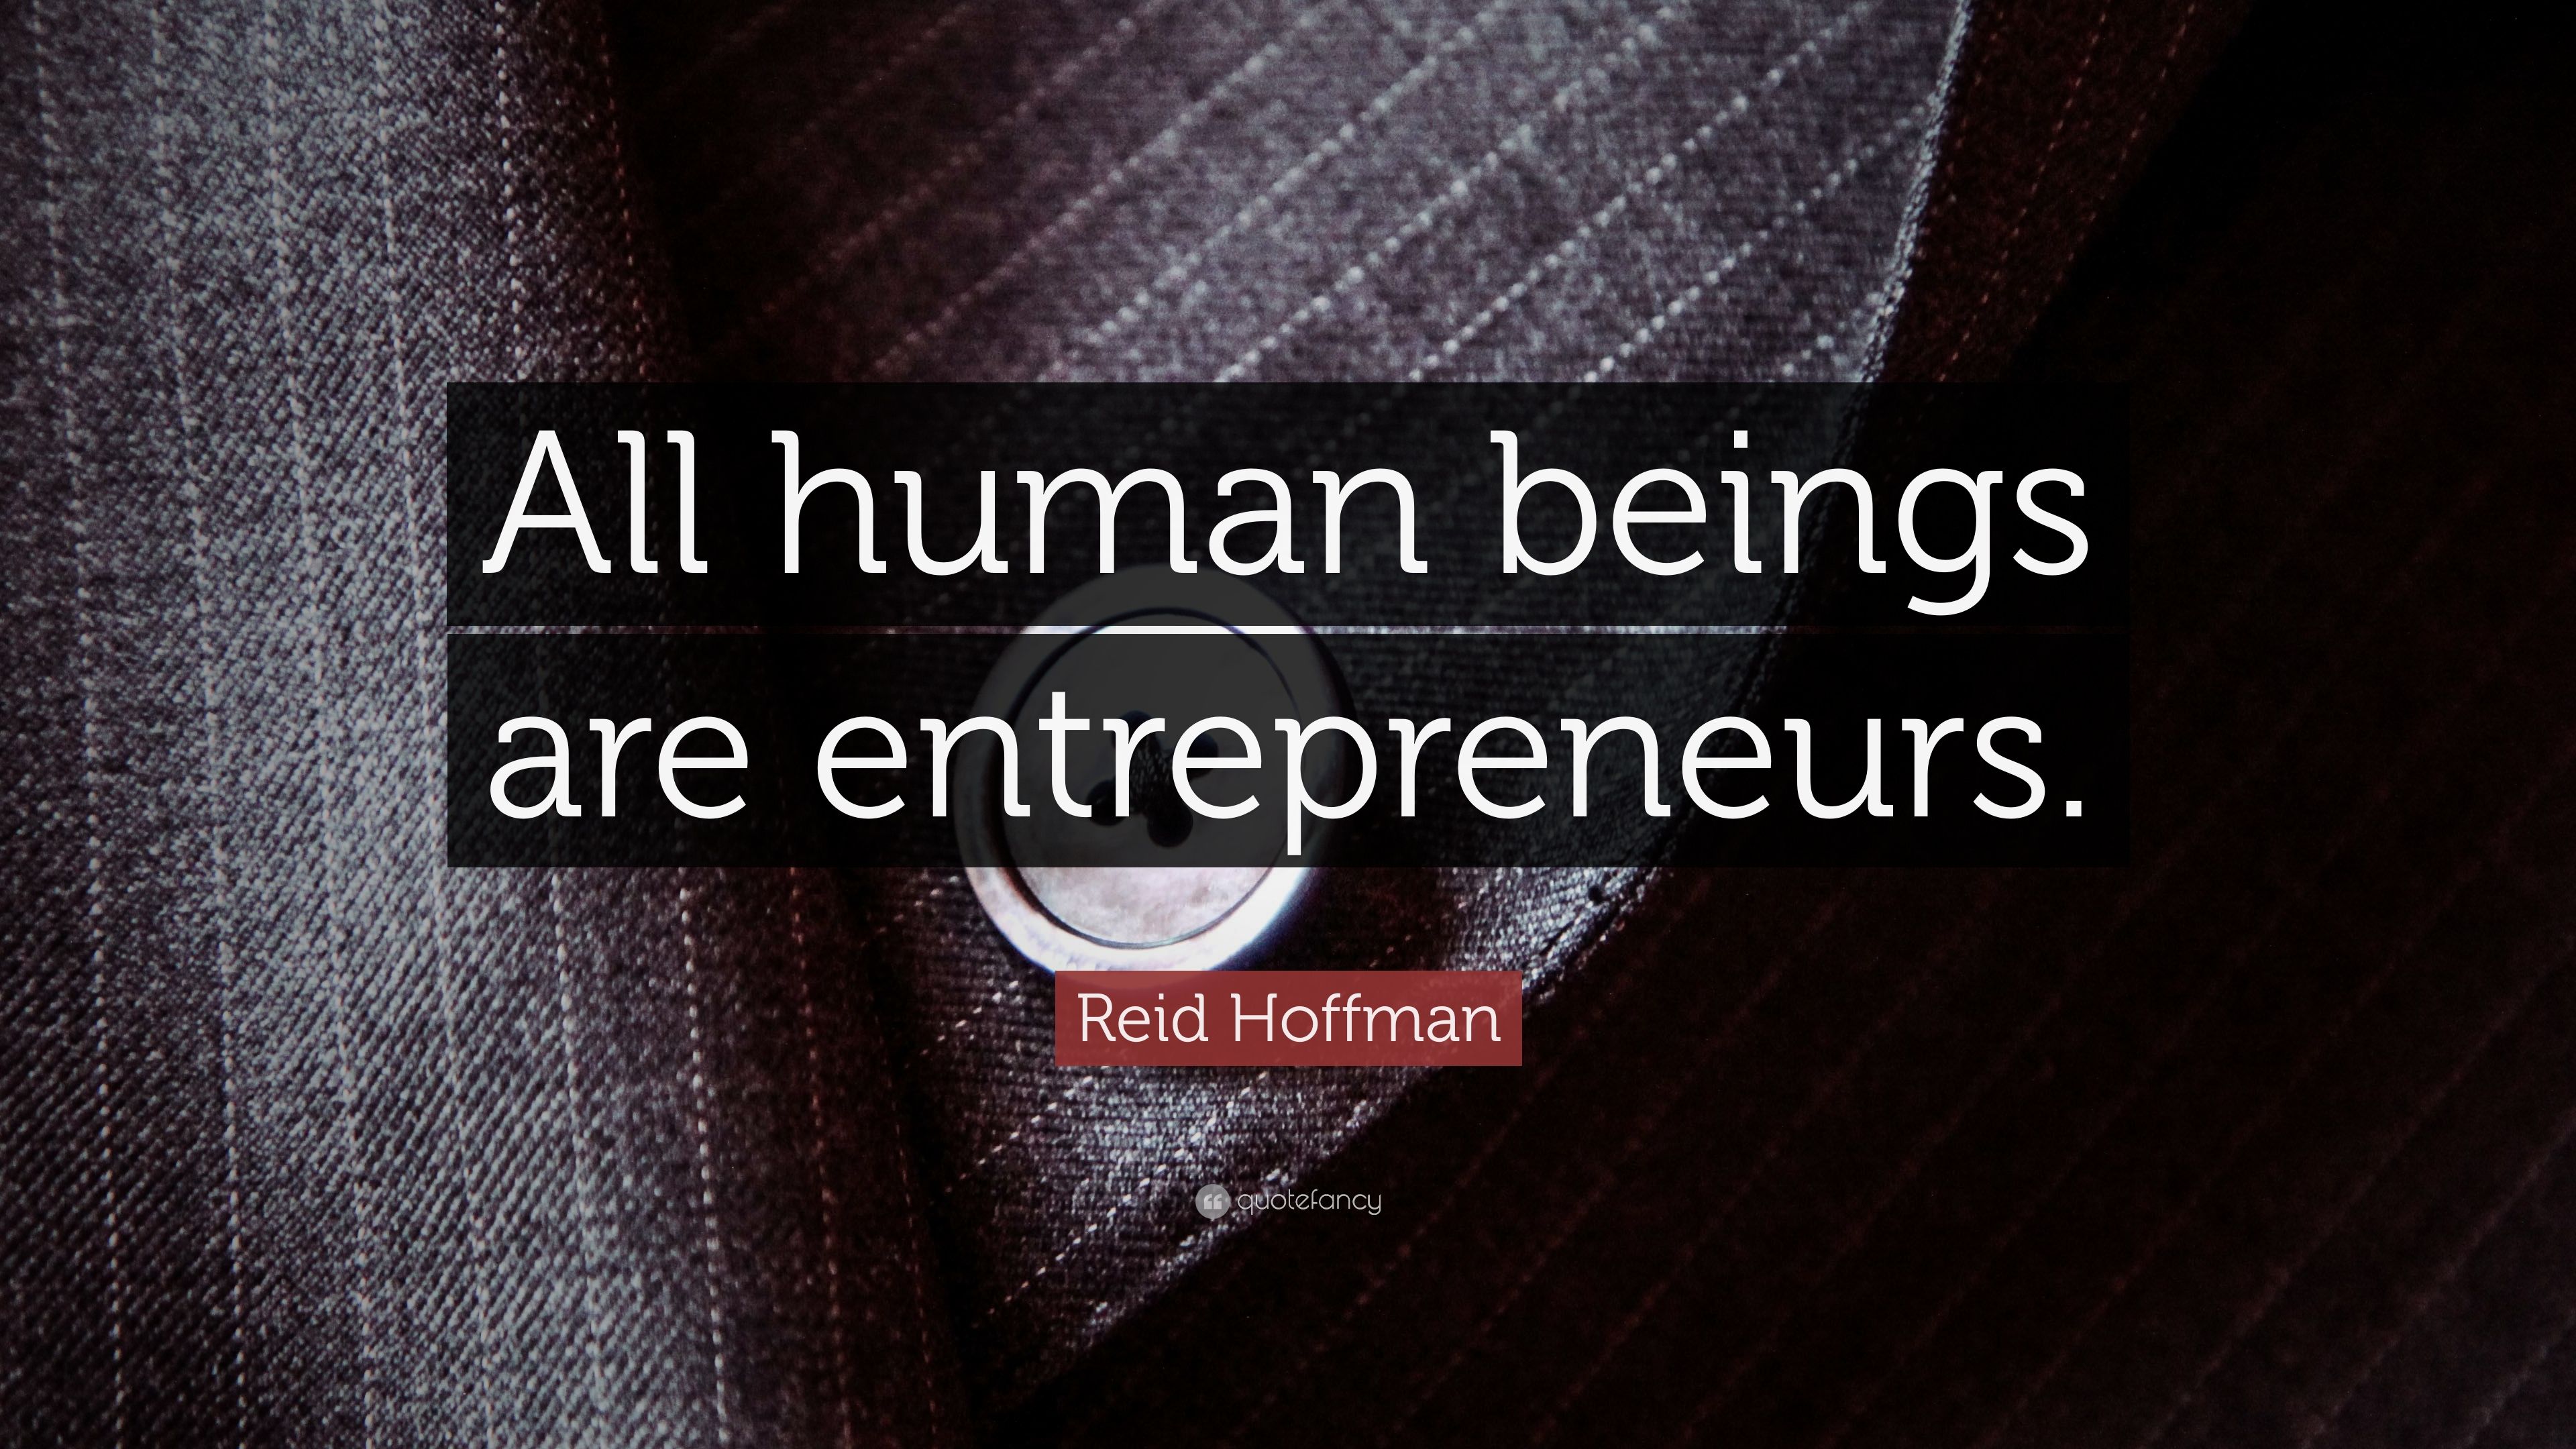 Reid Hoffman Quote: “All human beings are entrepreneurs.” (12 wallpaper)